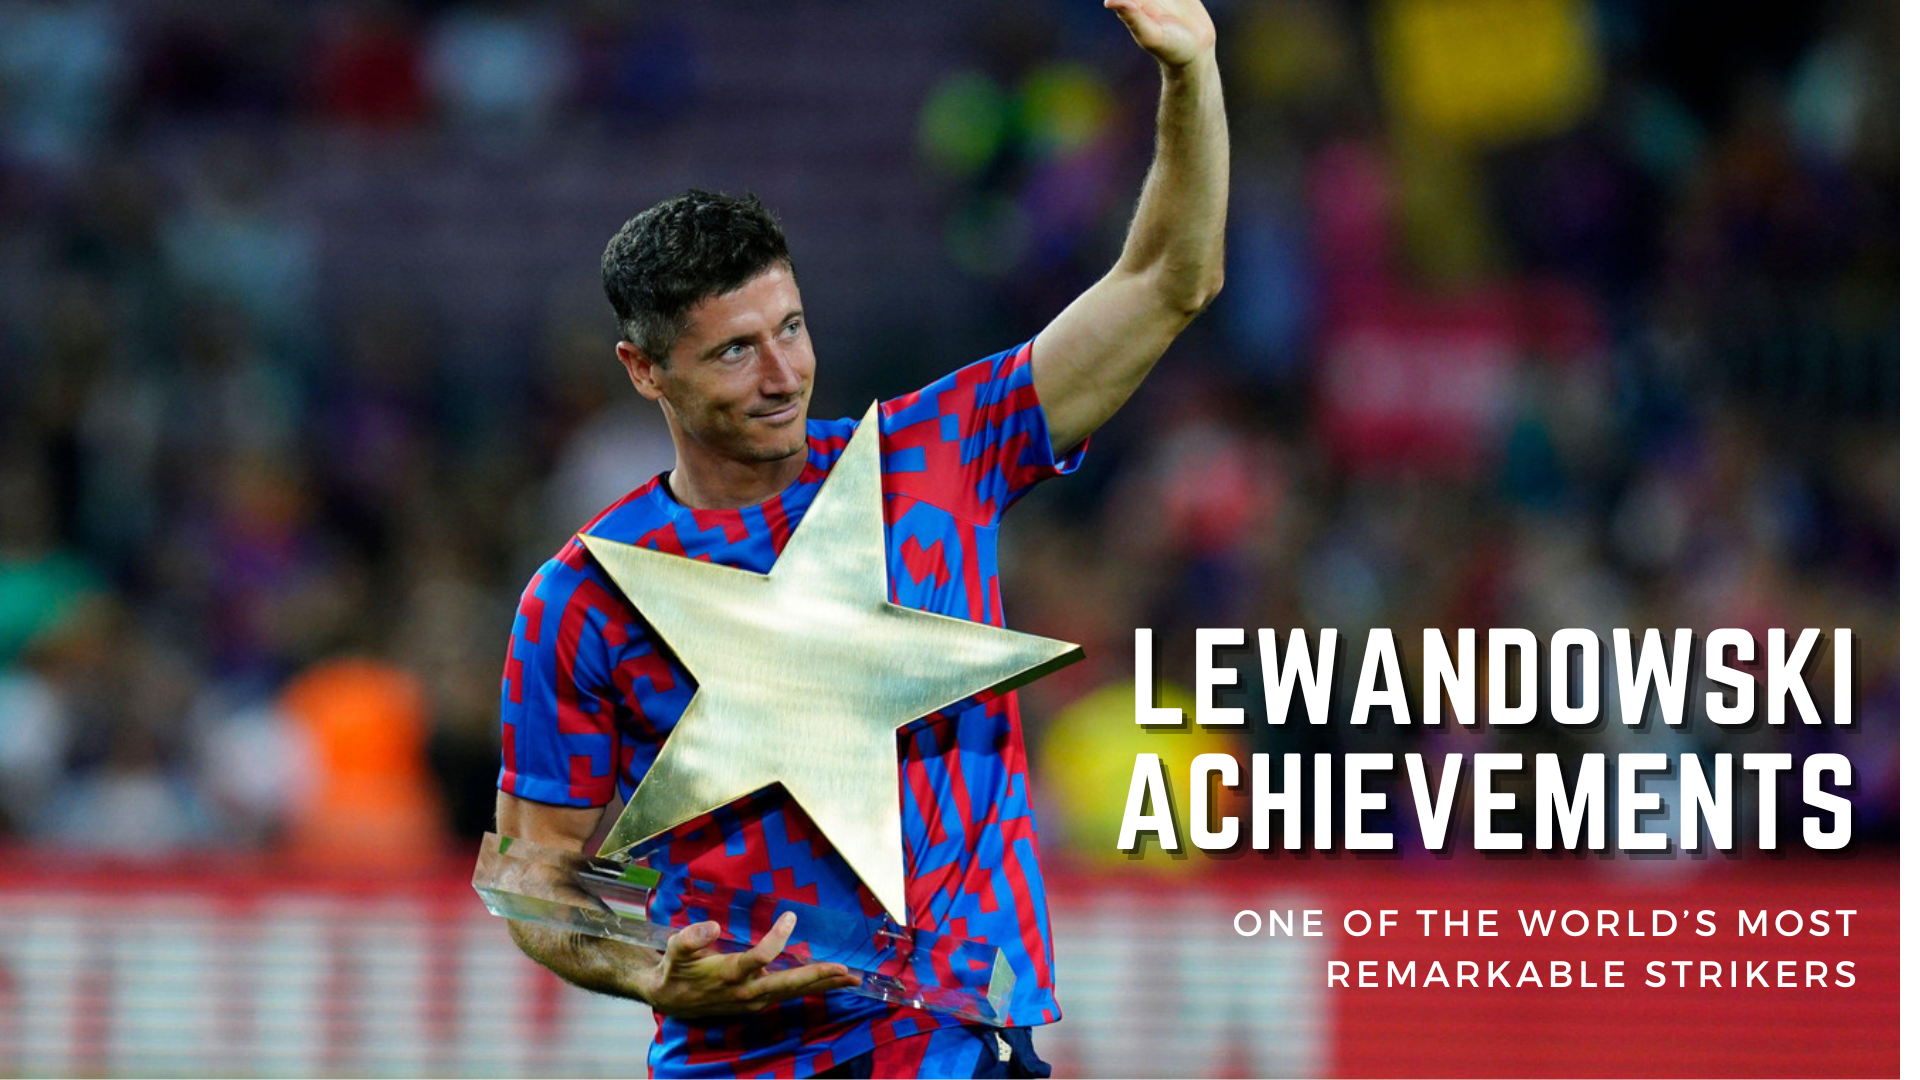 Lewandowski Achievements - One Of The World’s Most Remarkable Strikers